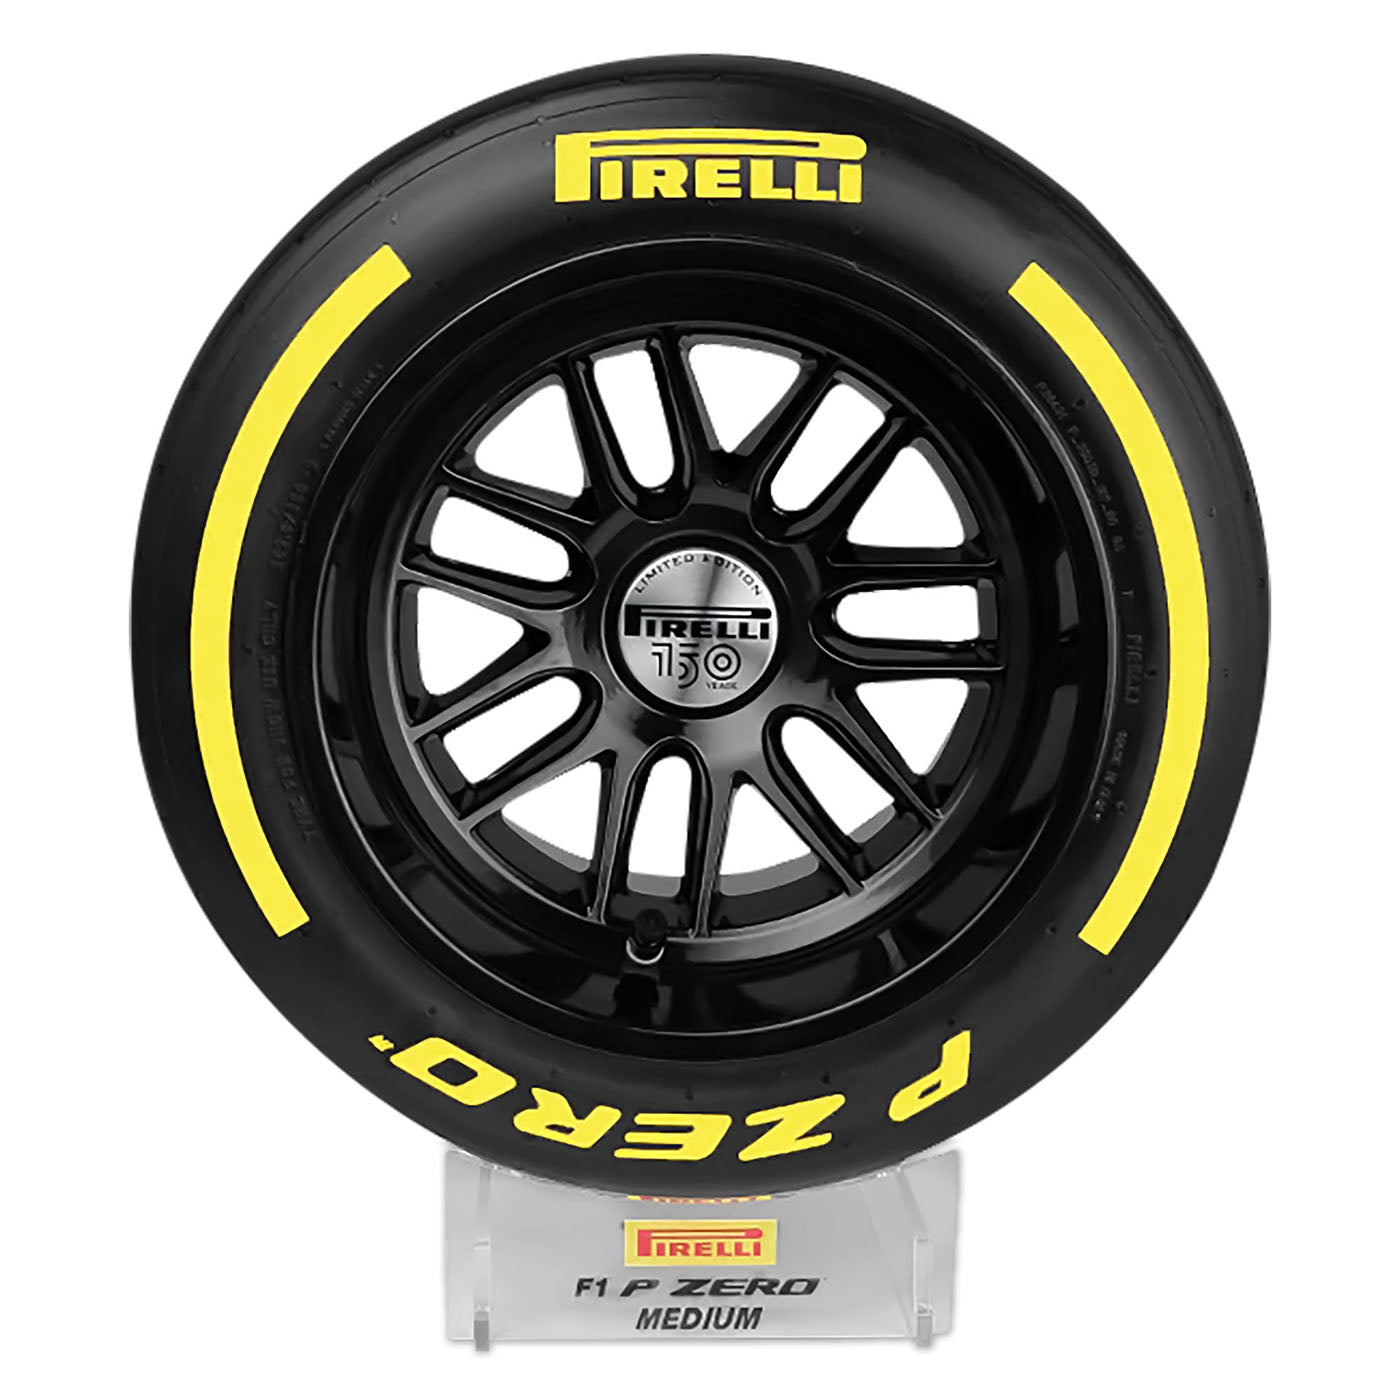 Pirelli Pole Position Tyre 1:2 Scale